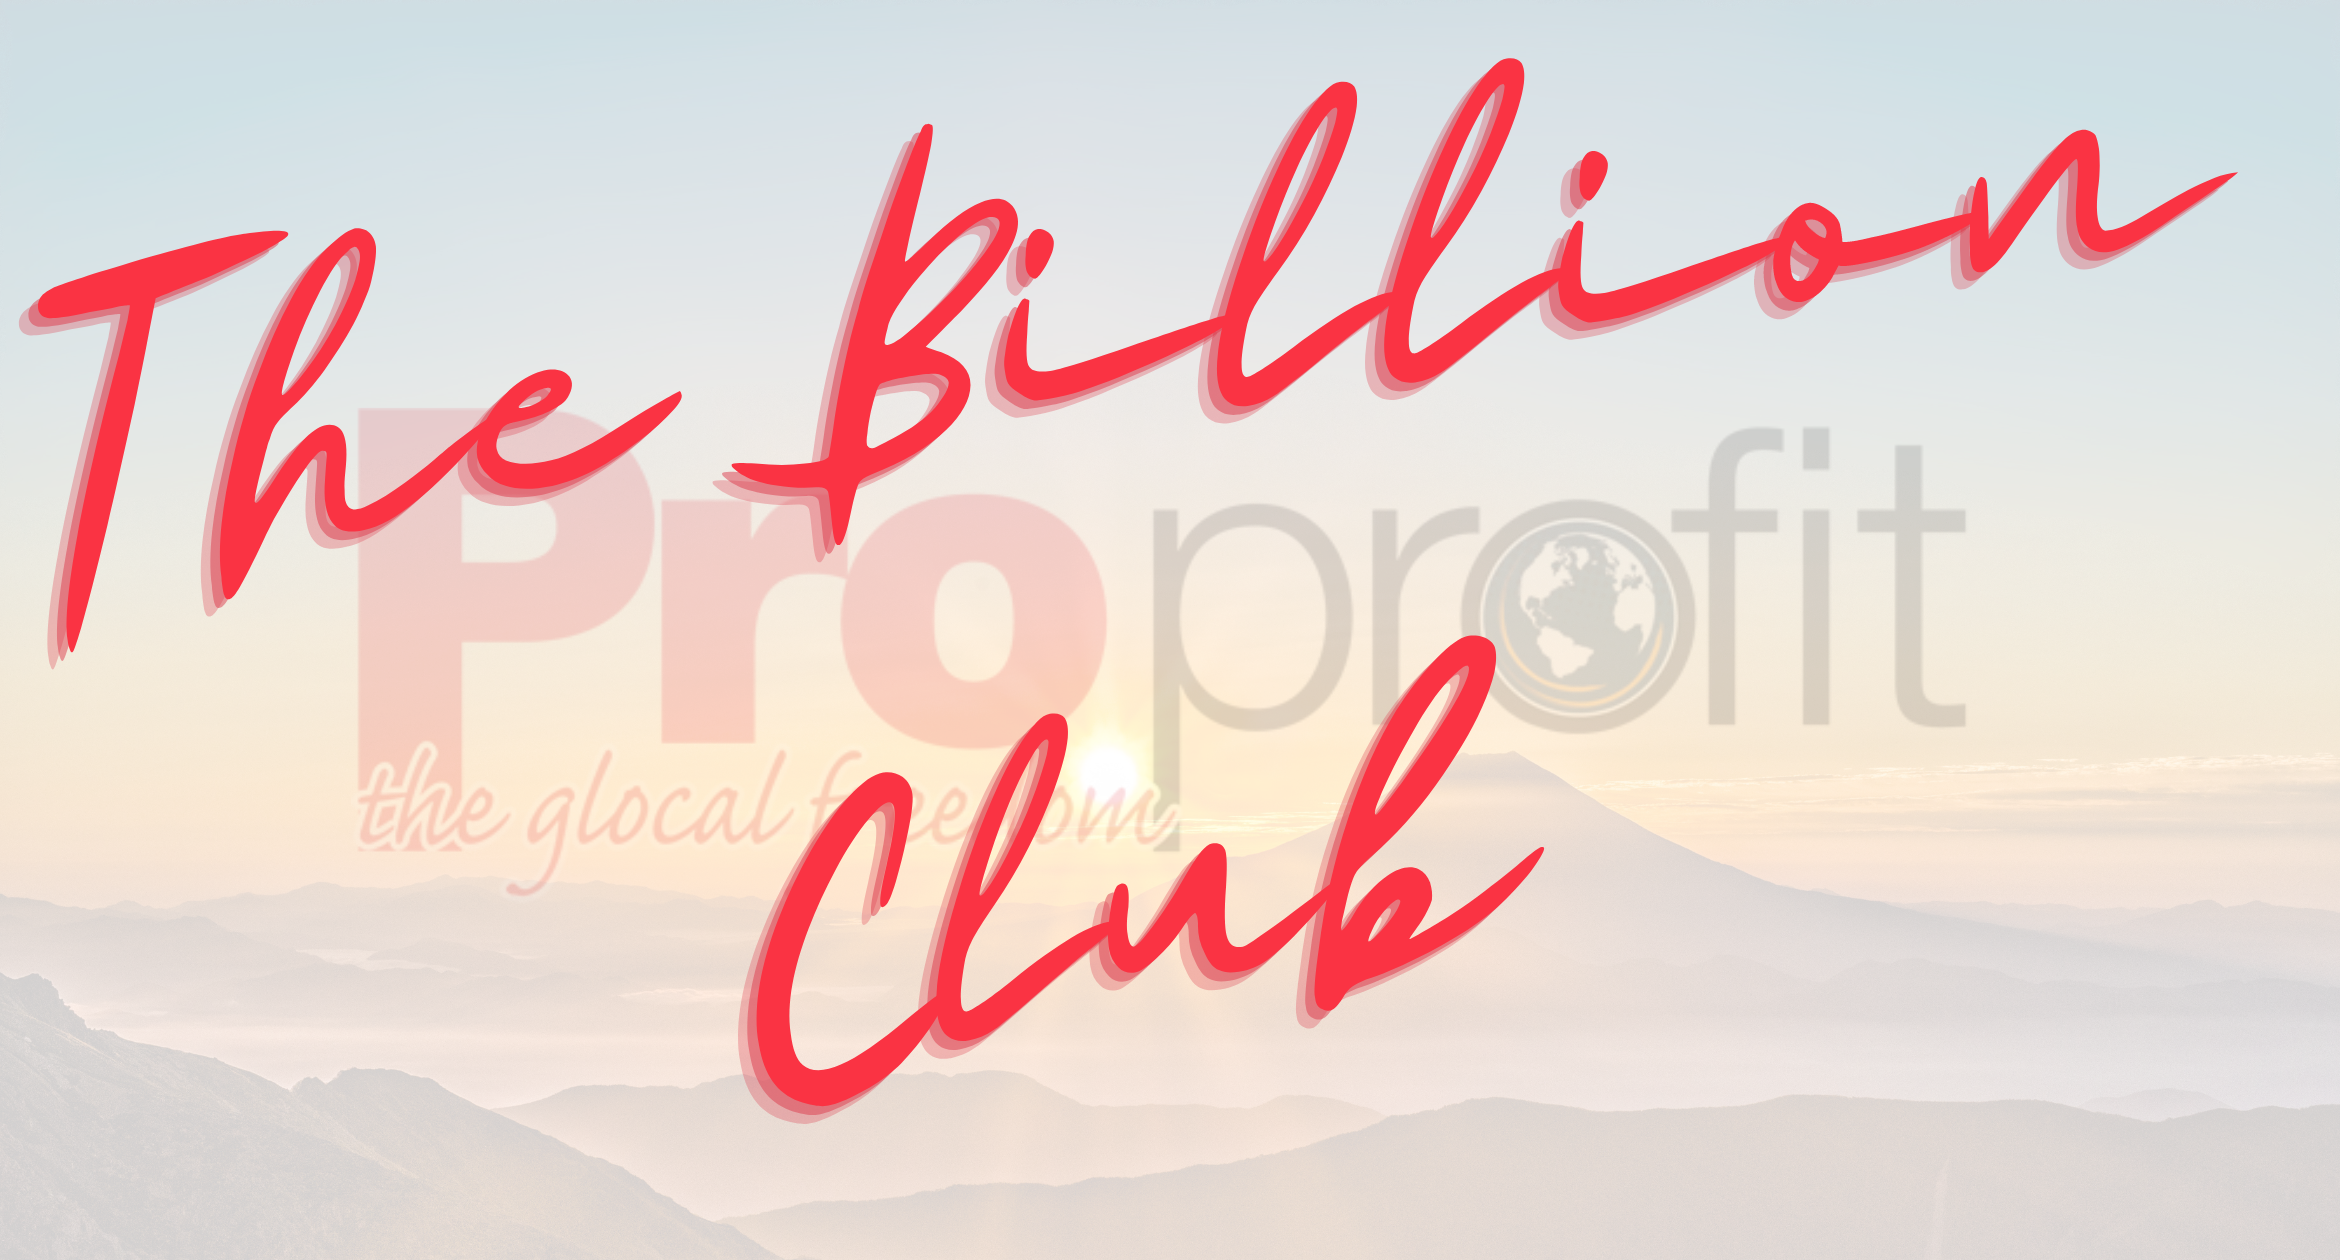 The Proprofit Billion Club Training